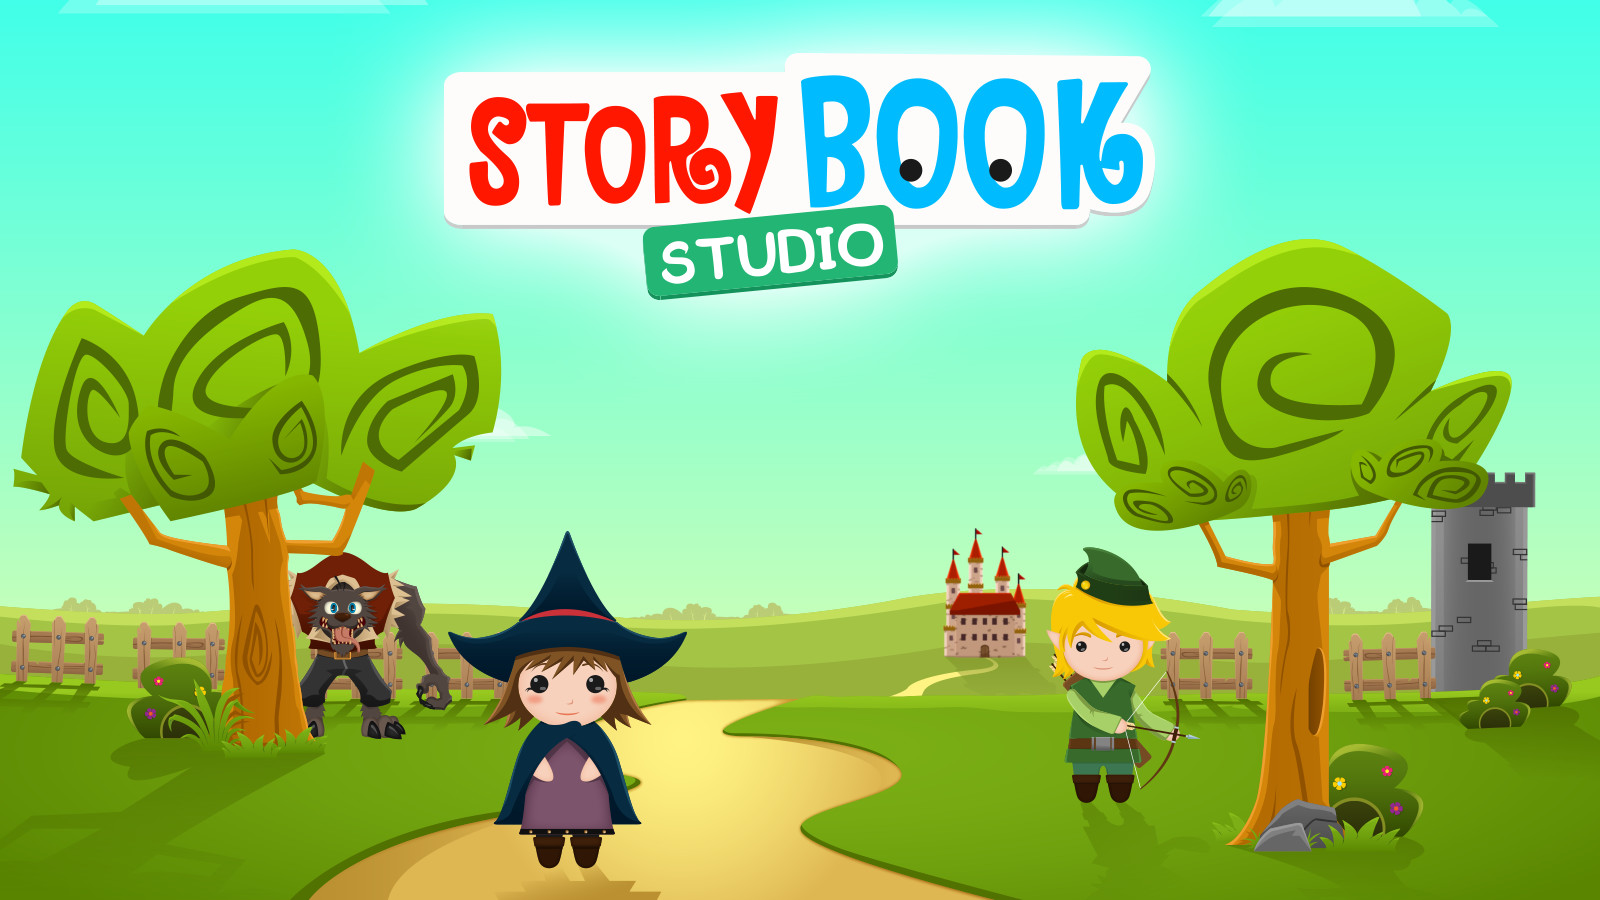 StoryBook Studio